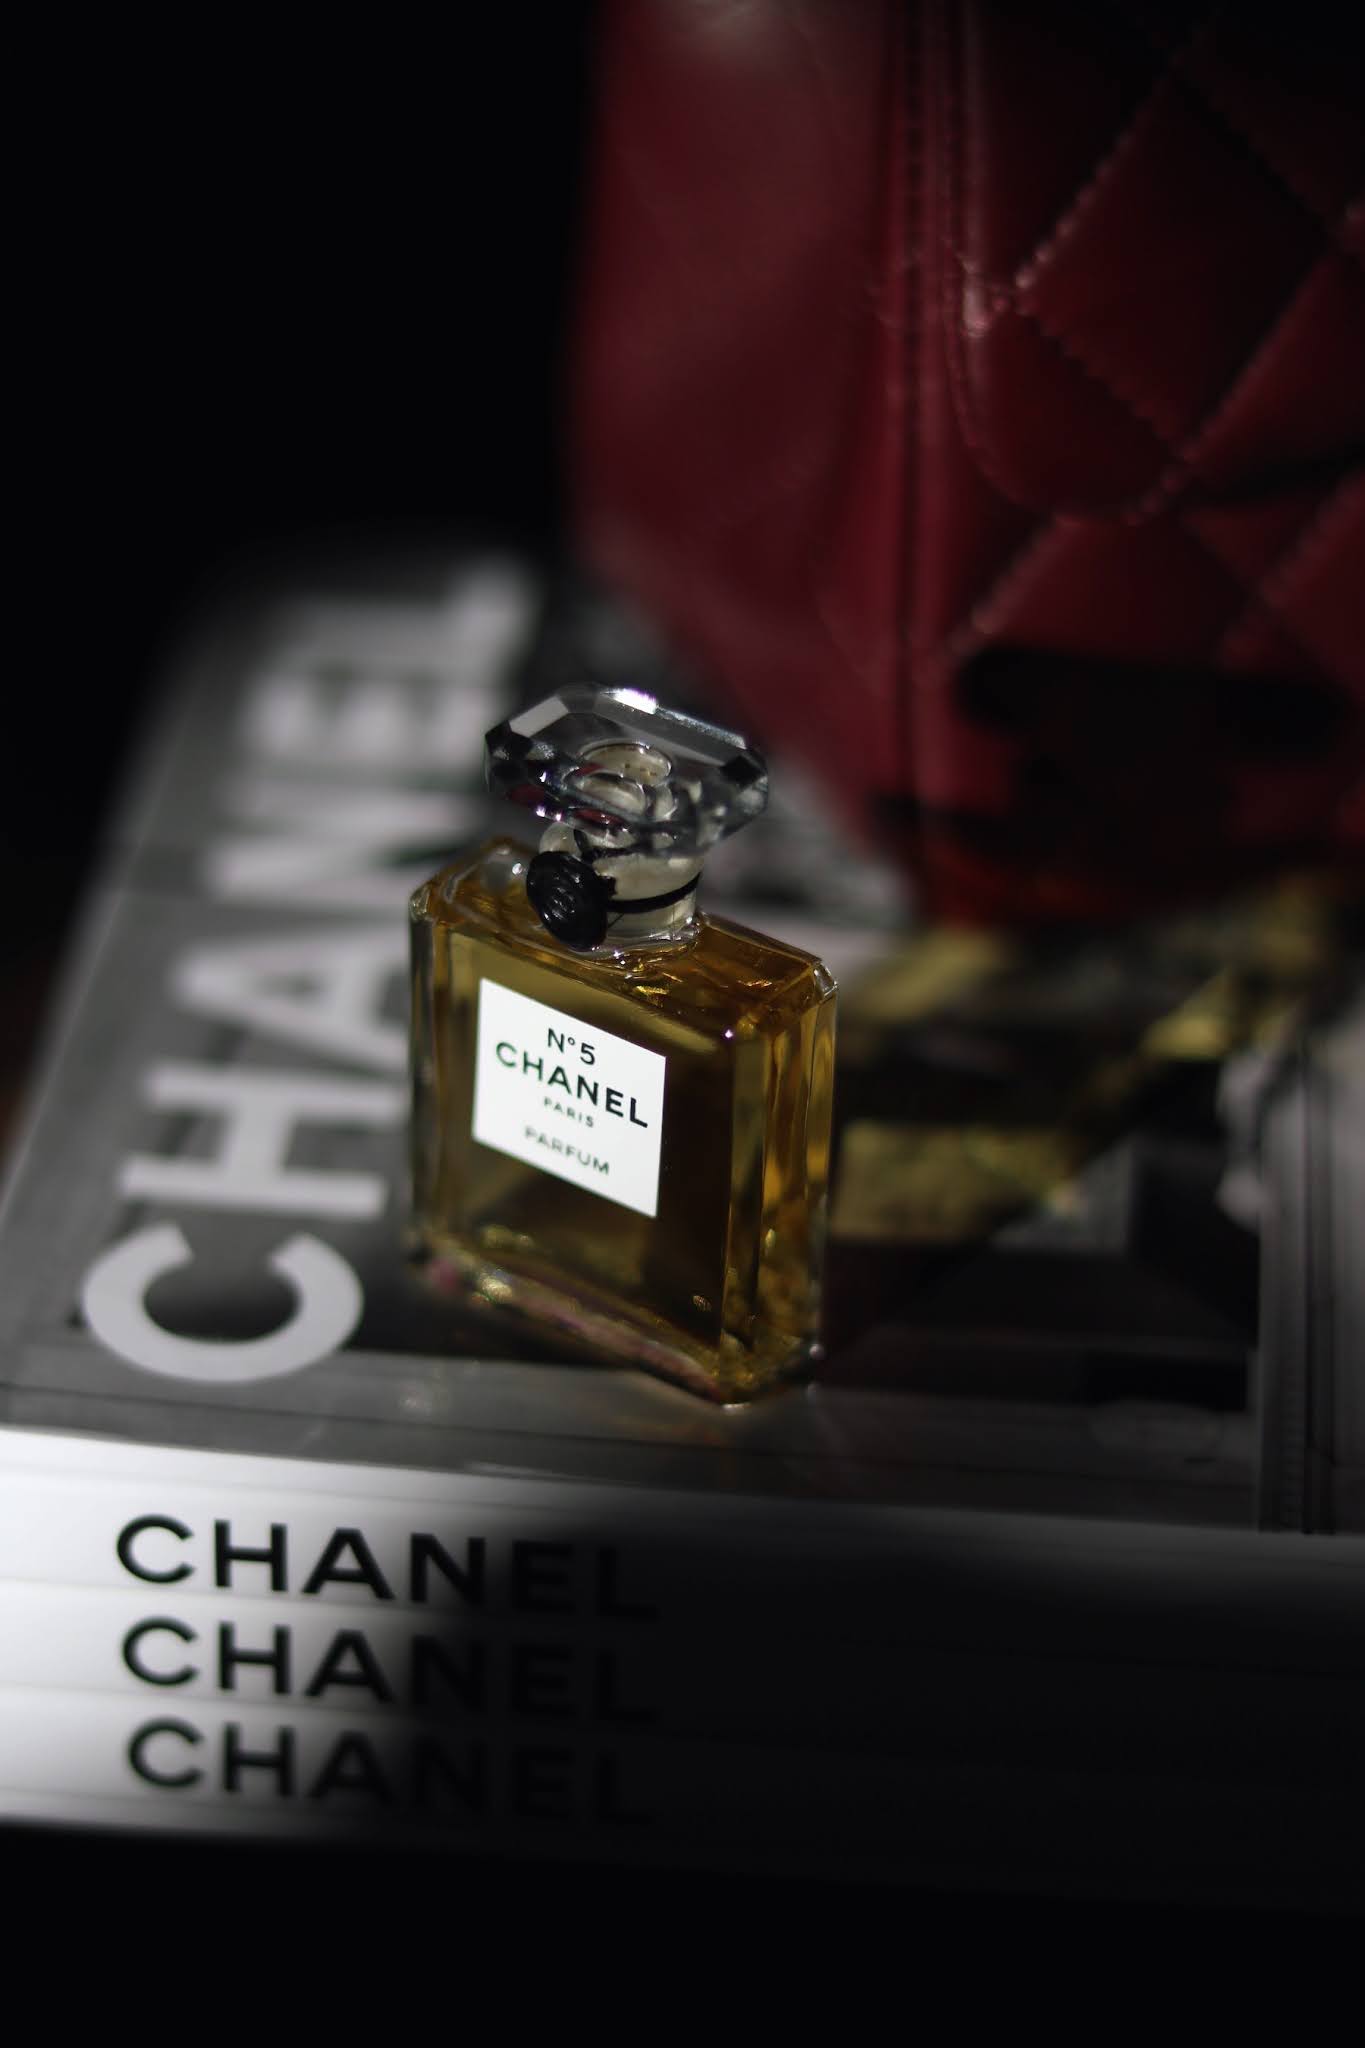 Chanel No5 fragrance 100 year anniversary